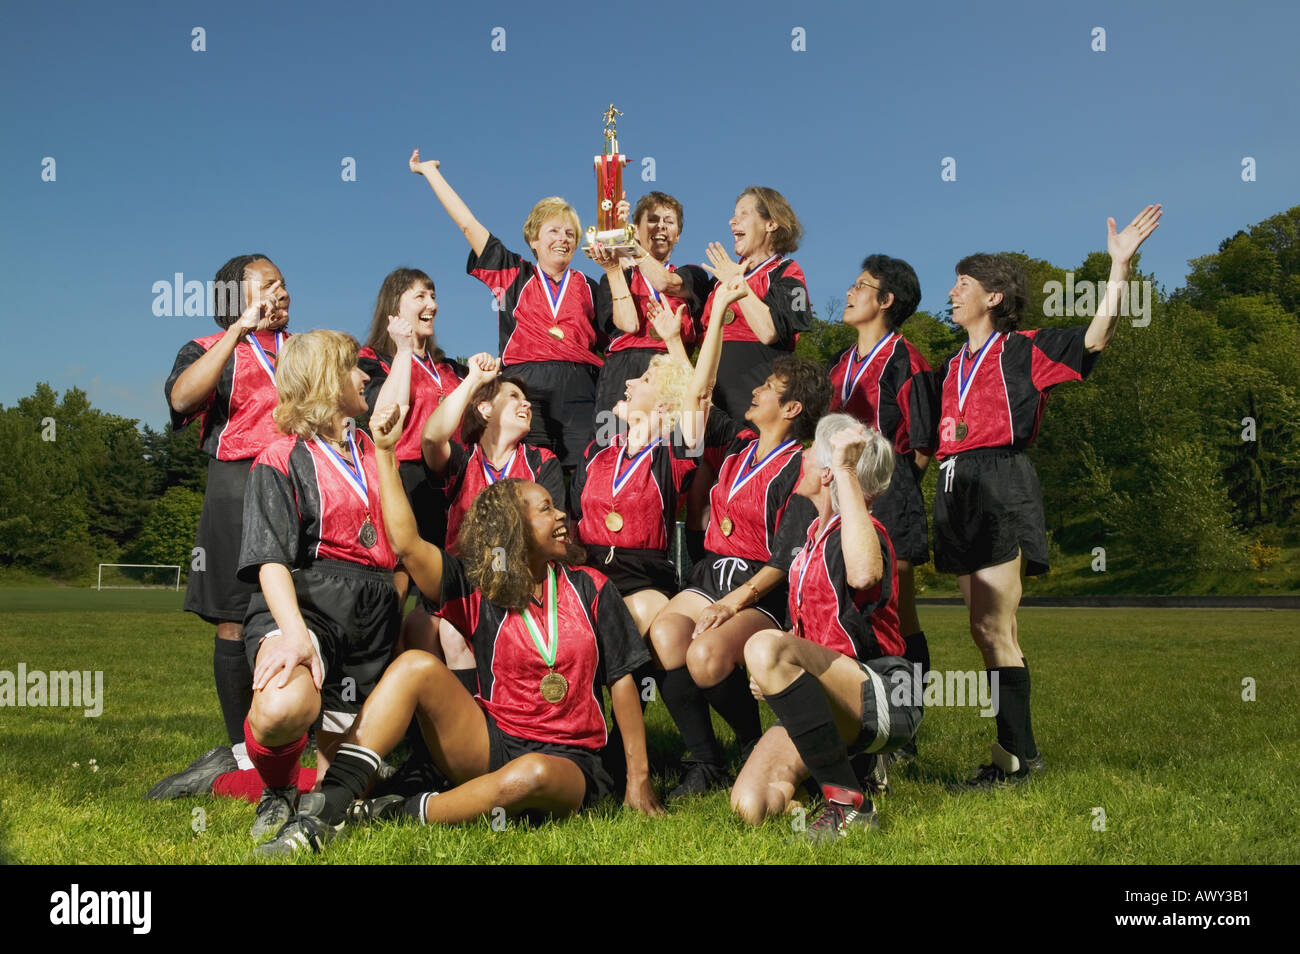 Female soccer team celebrating Stock Photo